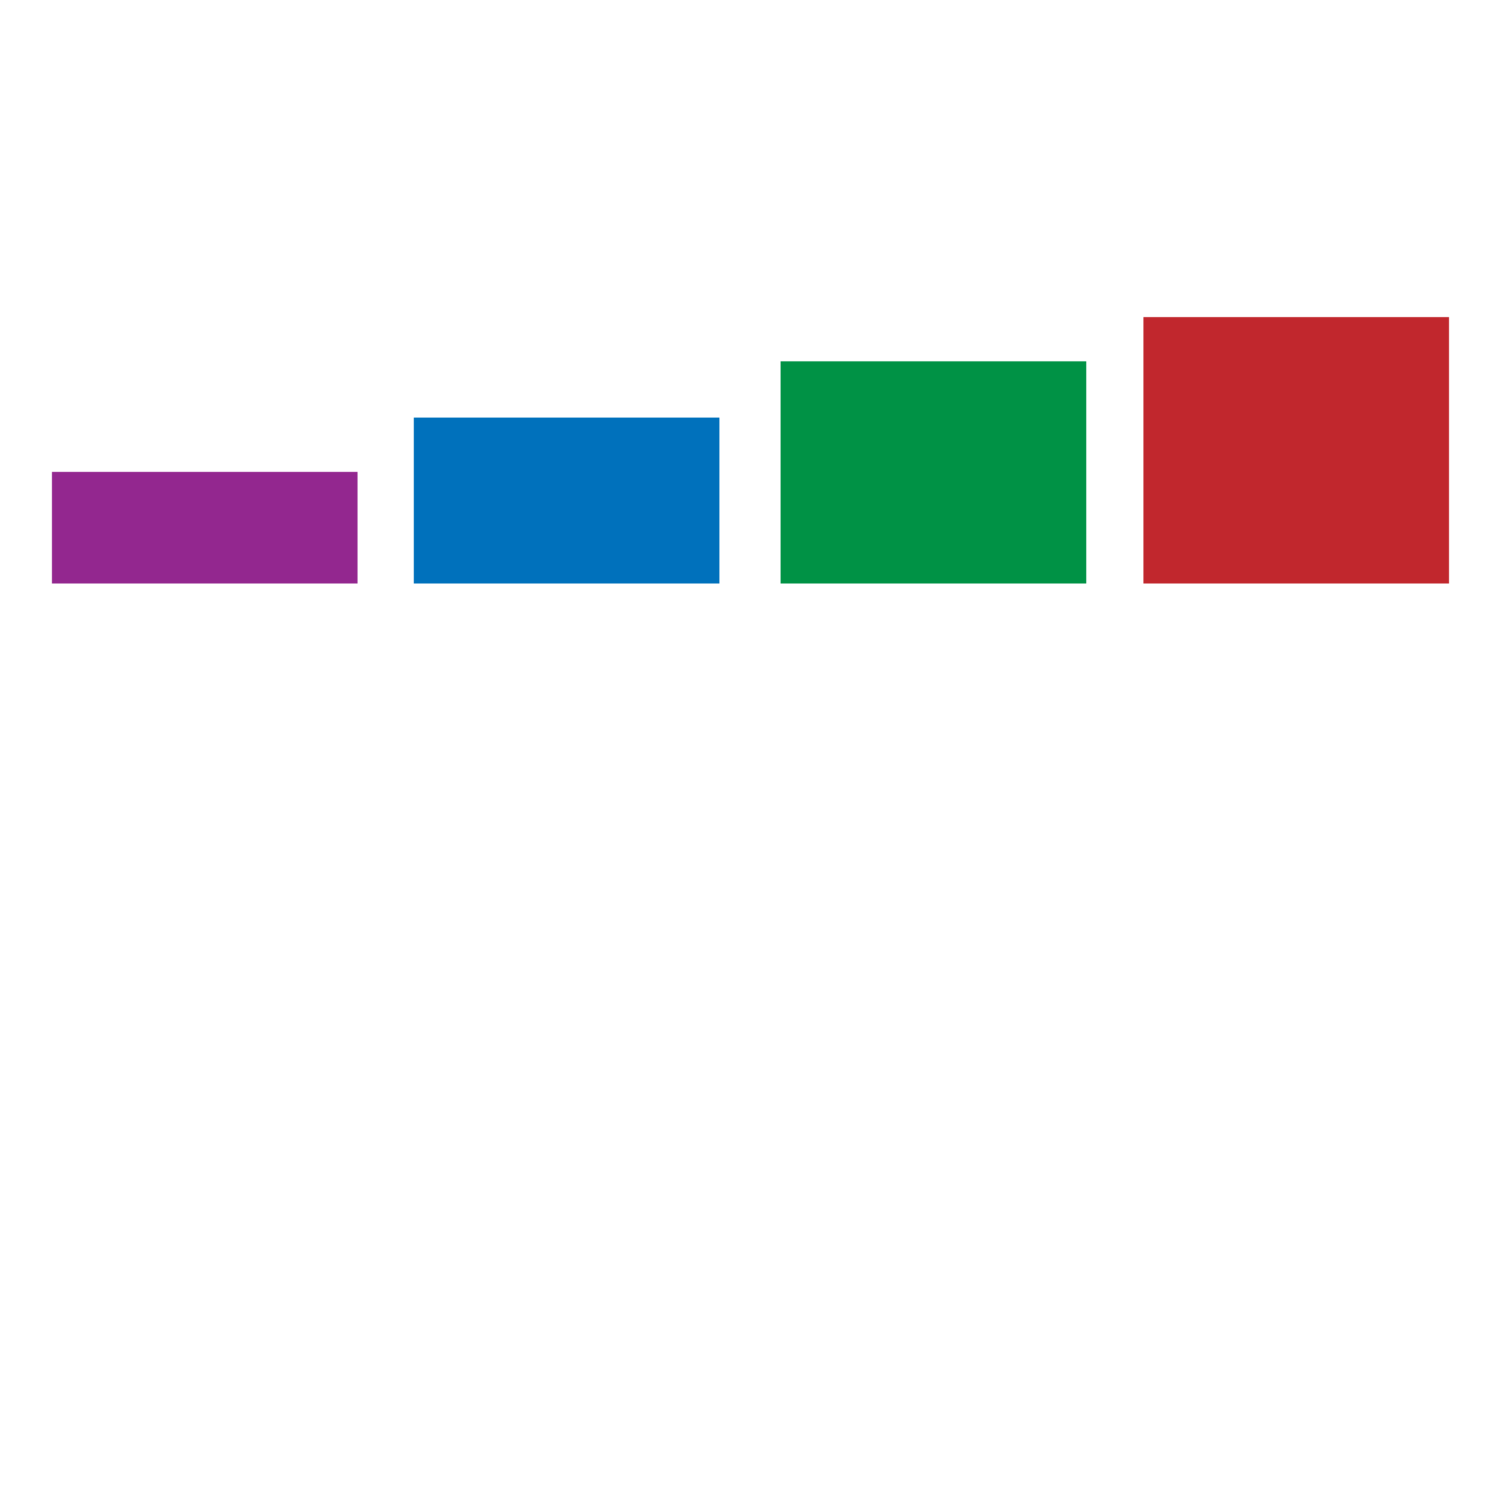 Eyelux Integrations